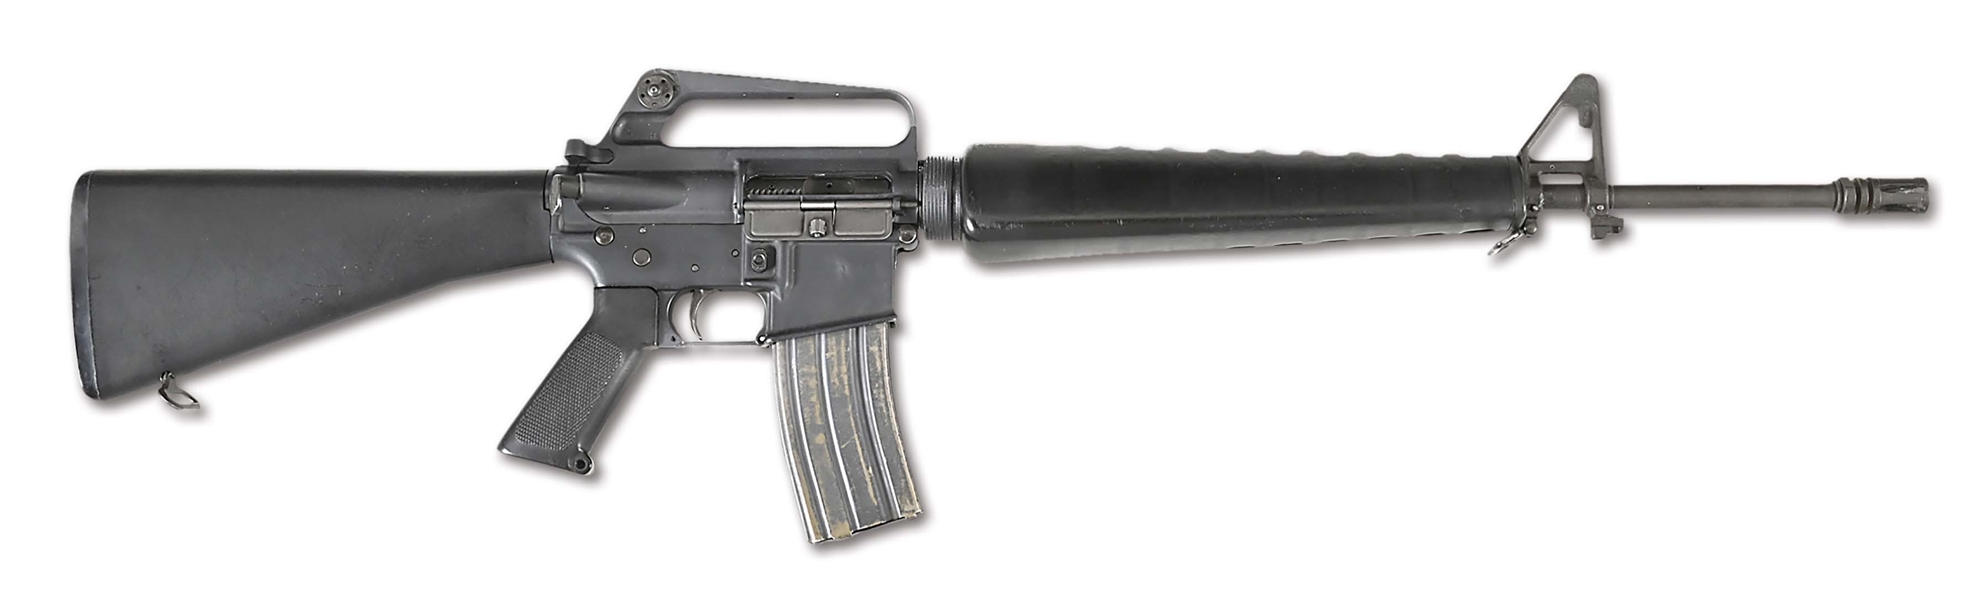 (N) HIGH CONDITION COLT M16A1 MACHINE GUN (FULLY TRANSFERABLE).